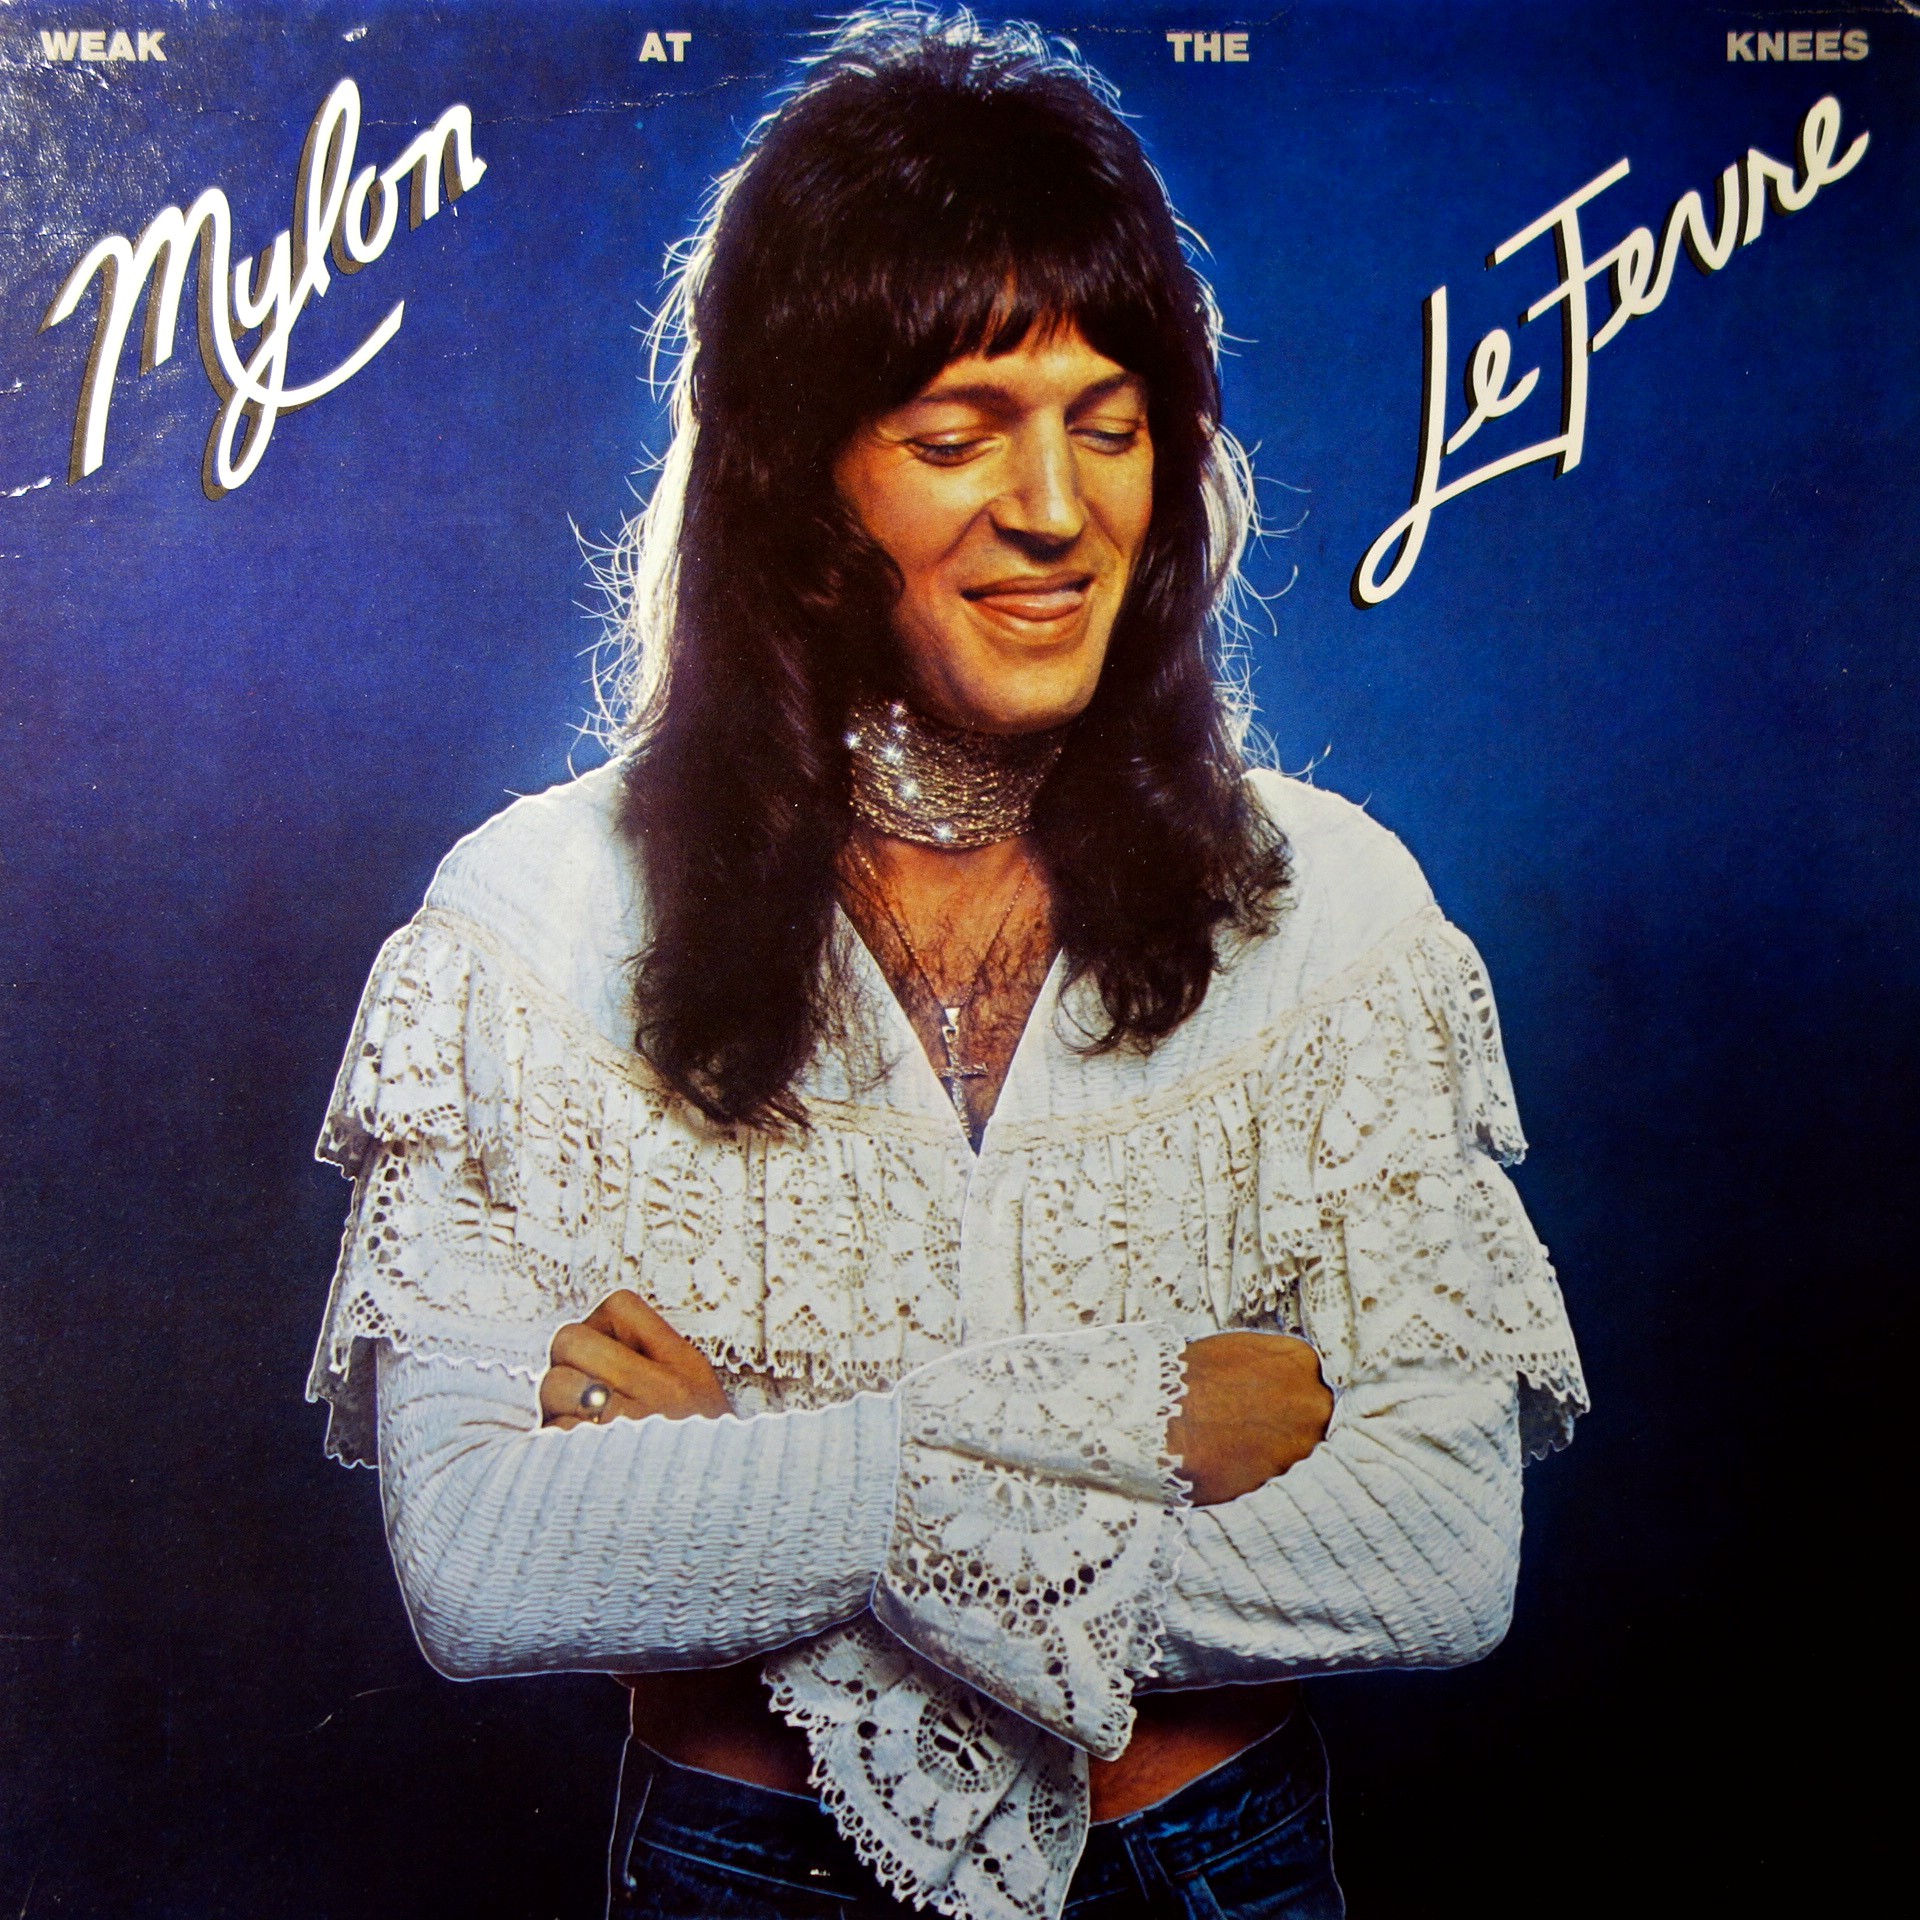 LP Mylon LeFevre ‎– Weak At The Knees